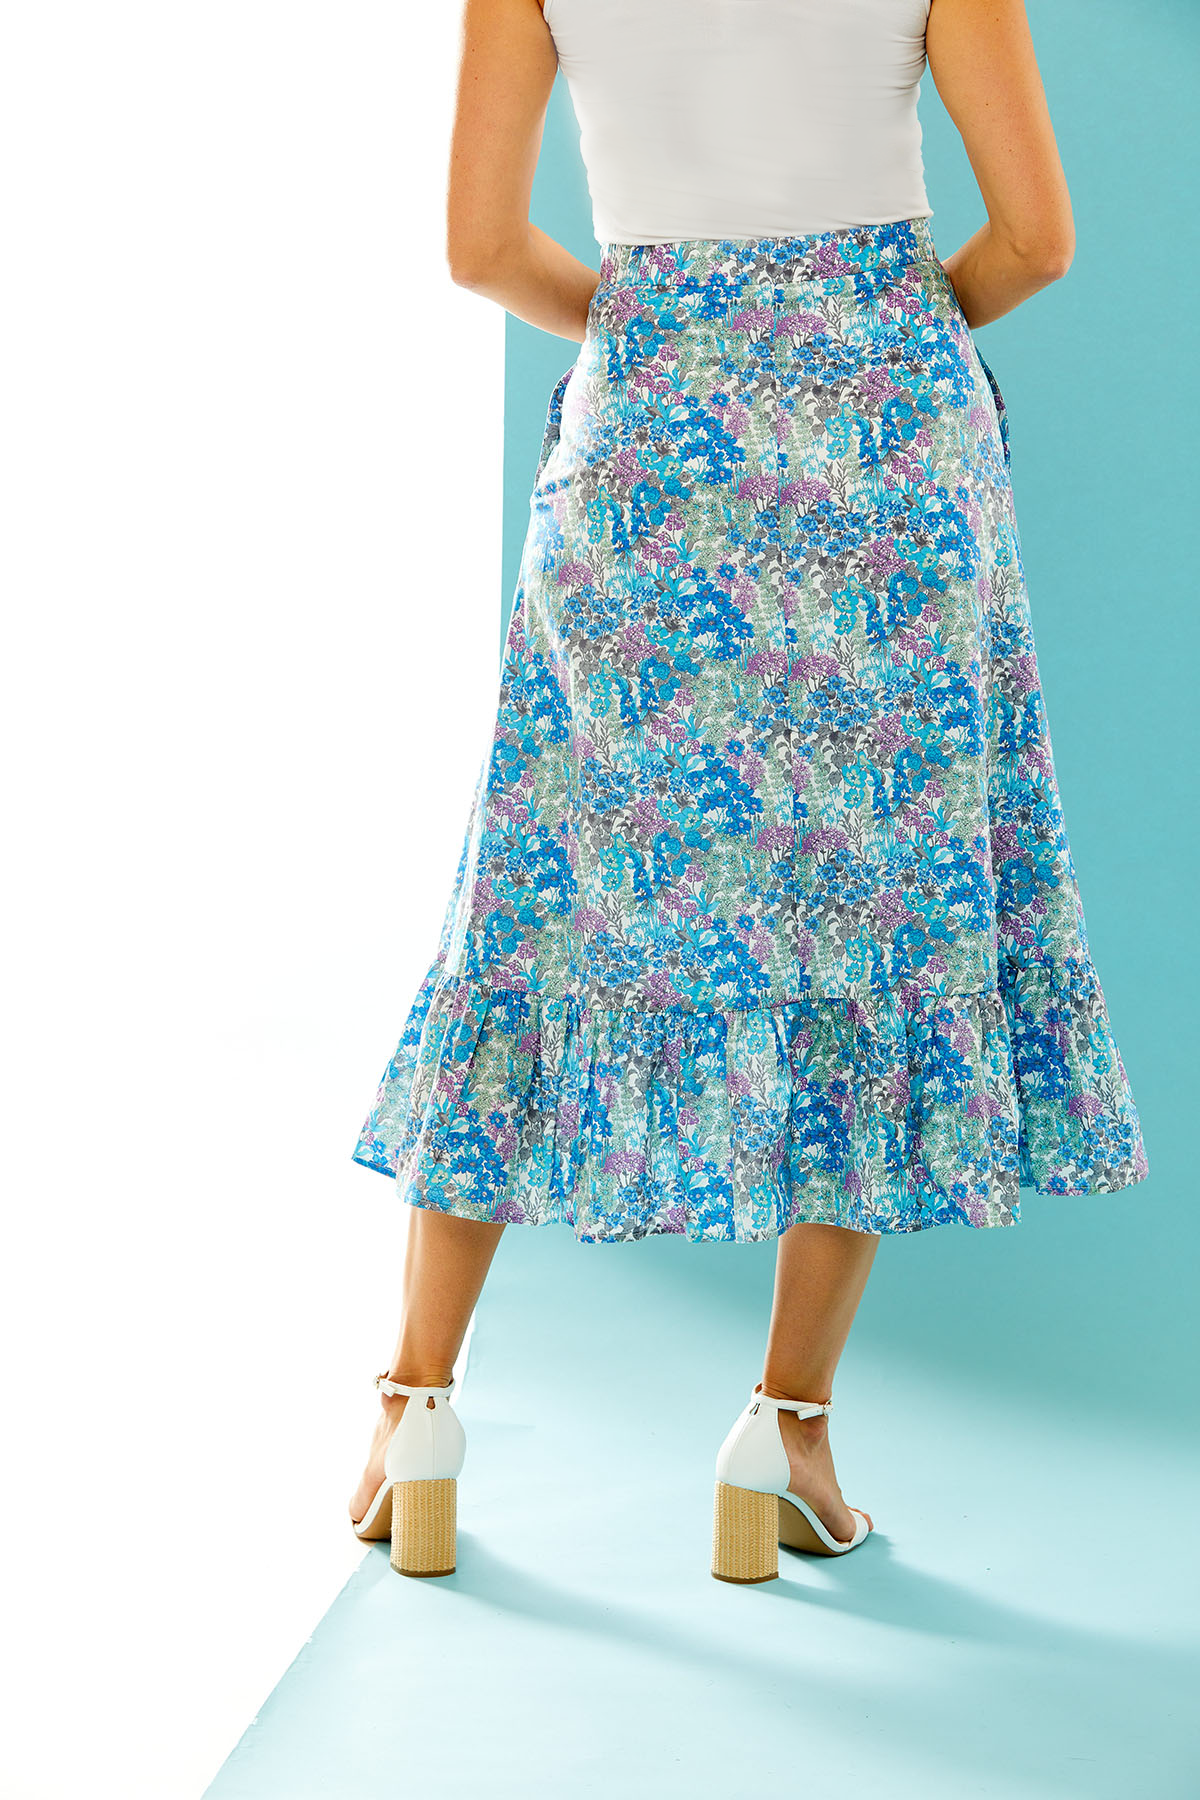 Woman in floral printed skirt